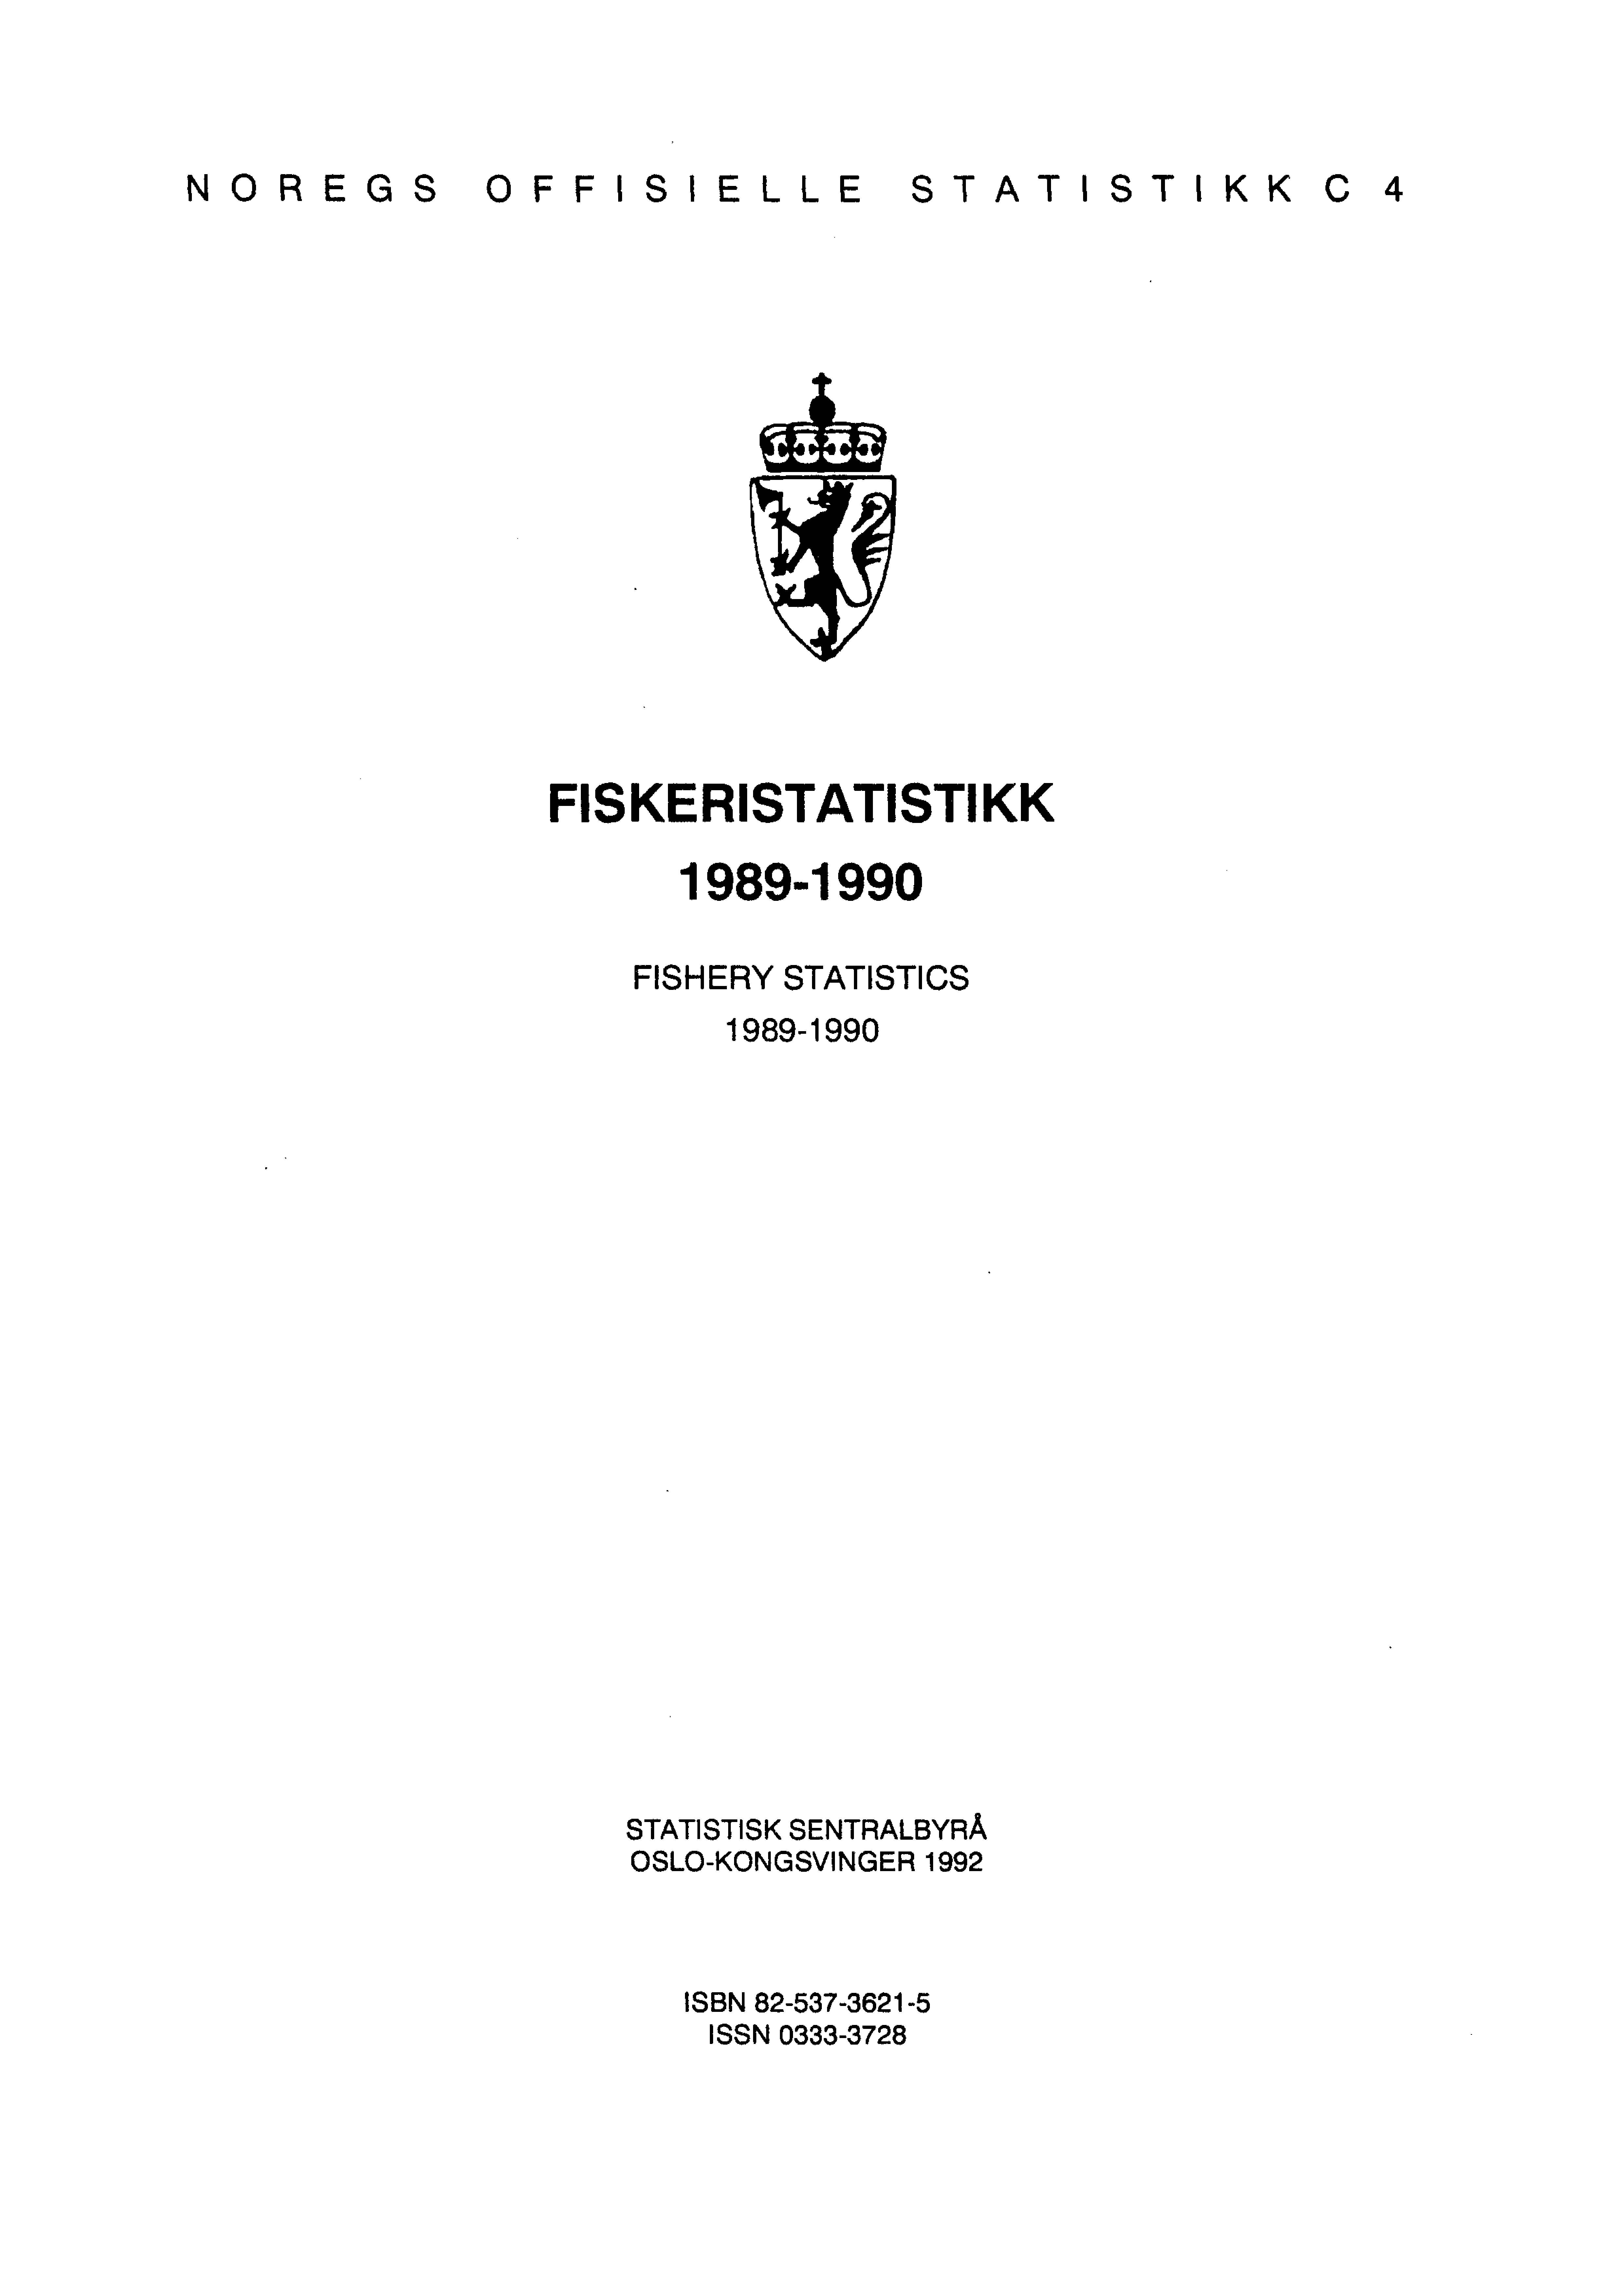 NOREGS OFFISIELLE STATISTIKK C 4 FISKERISTATISTIKK 1989-1990 FISHERY STATISTICS